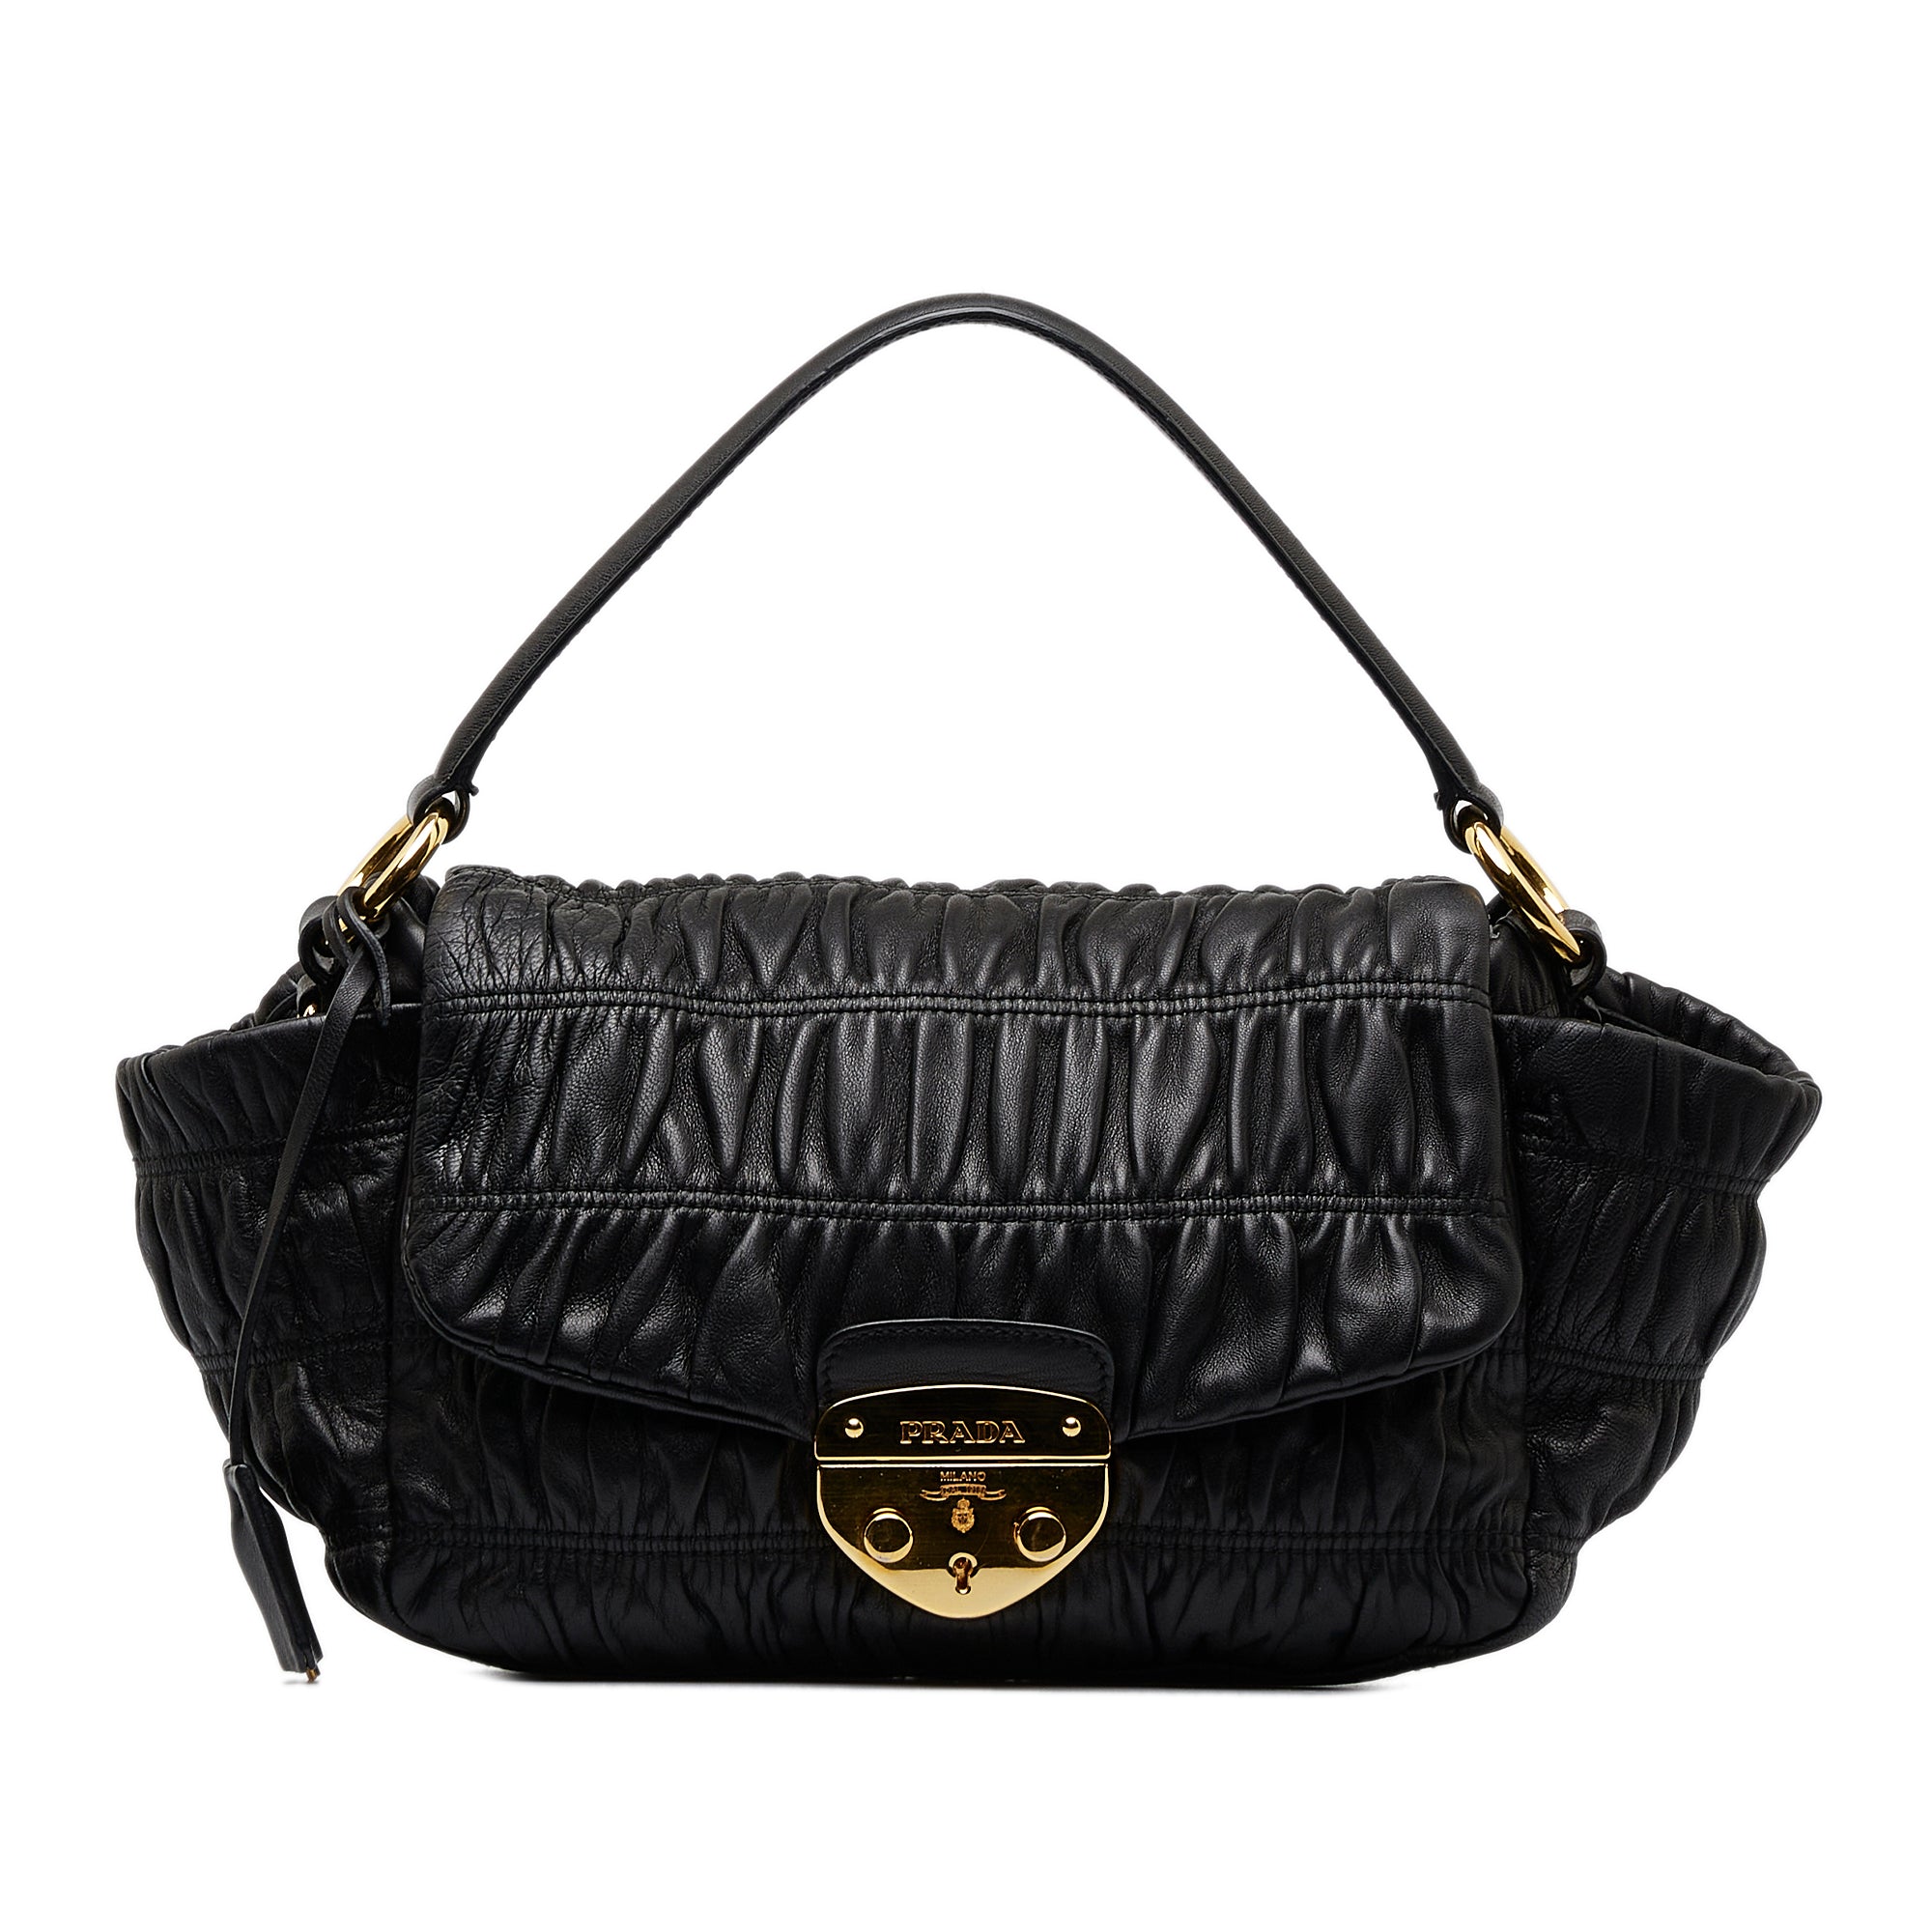 Prada Gaufre Nappa Leather Shopping Satchel Tote Handbag-Black